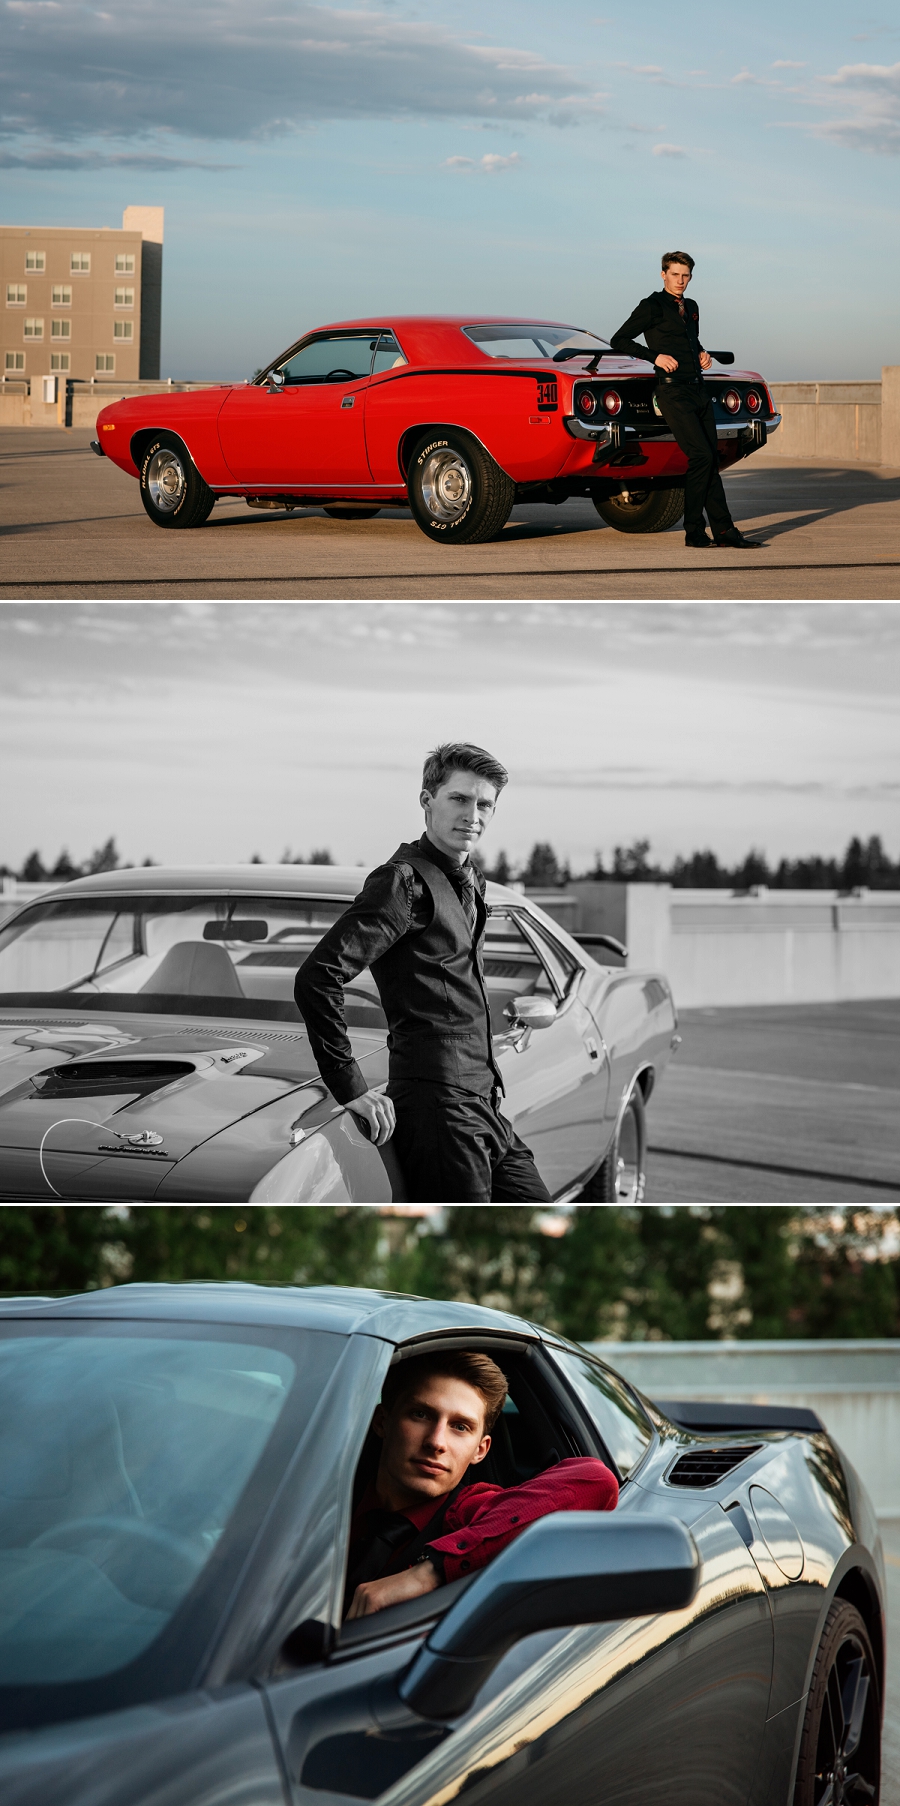 saskatoon graduation photos with classic cars